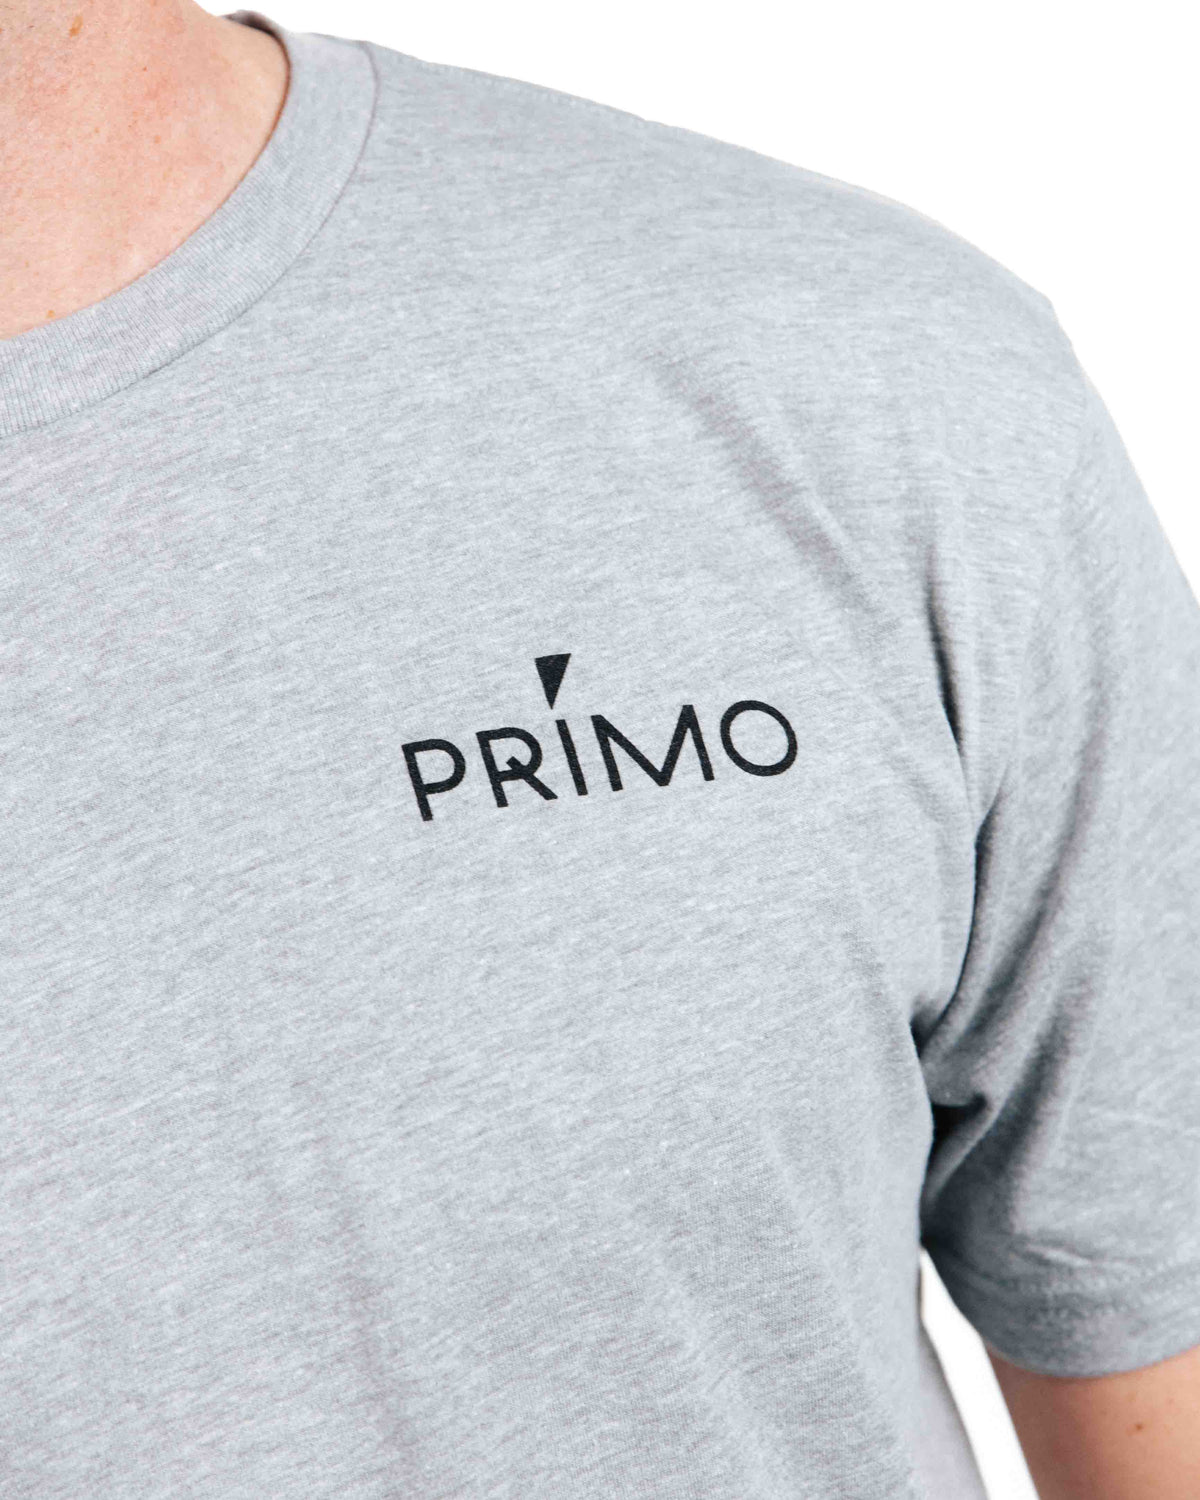 Primo Wordmark Logo Tee - Light Gray